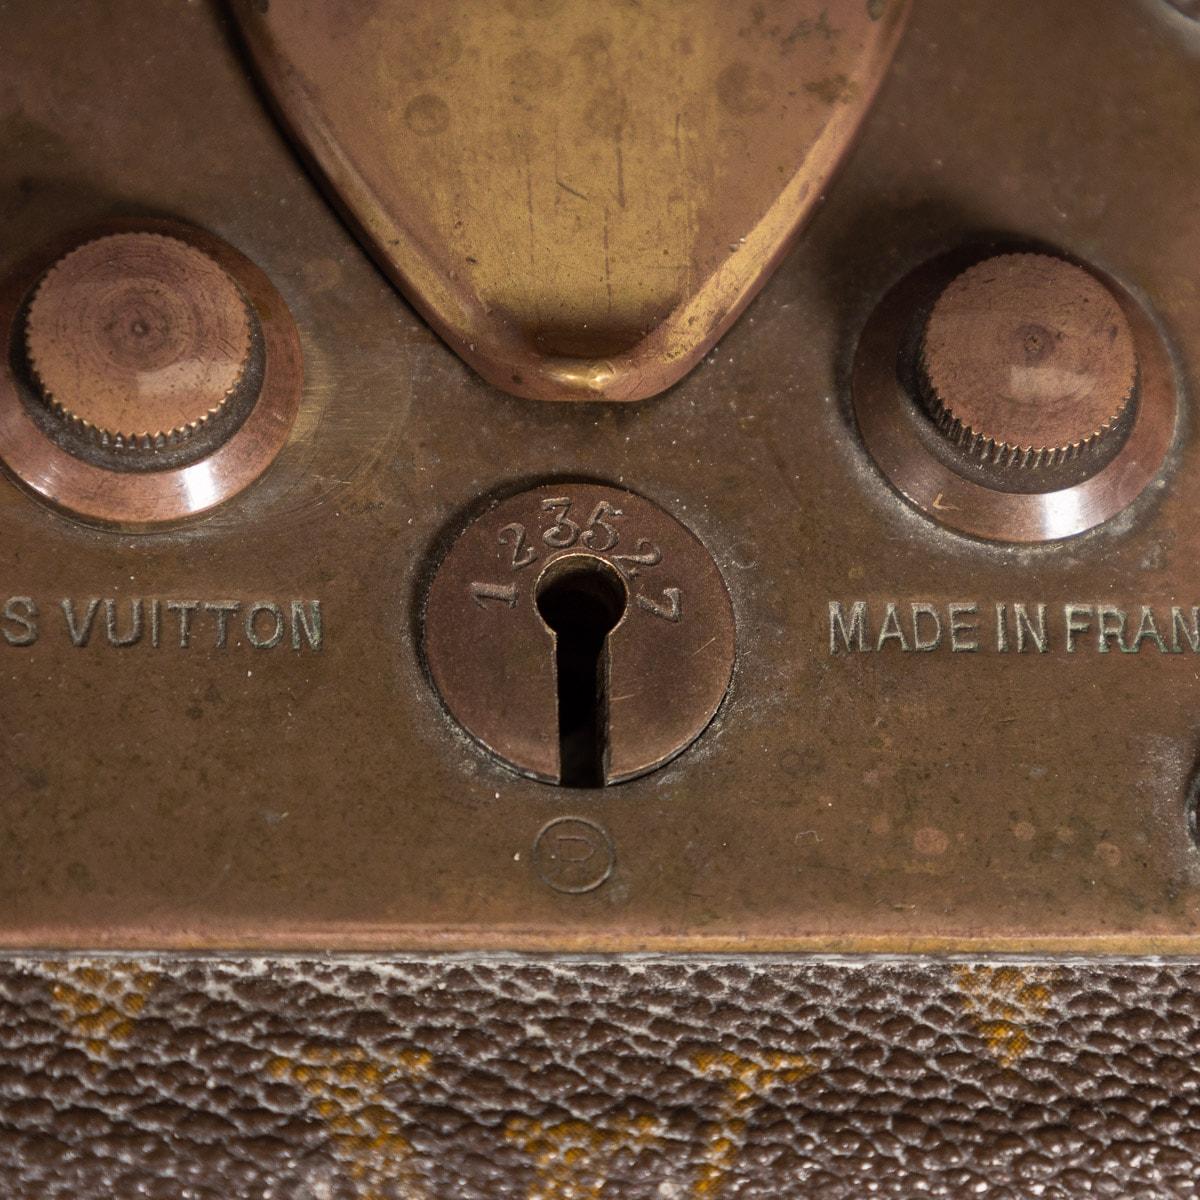 20th Century Louis Vuitton 